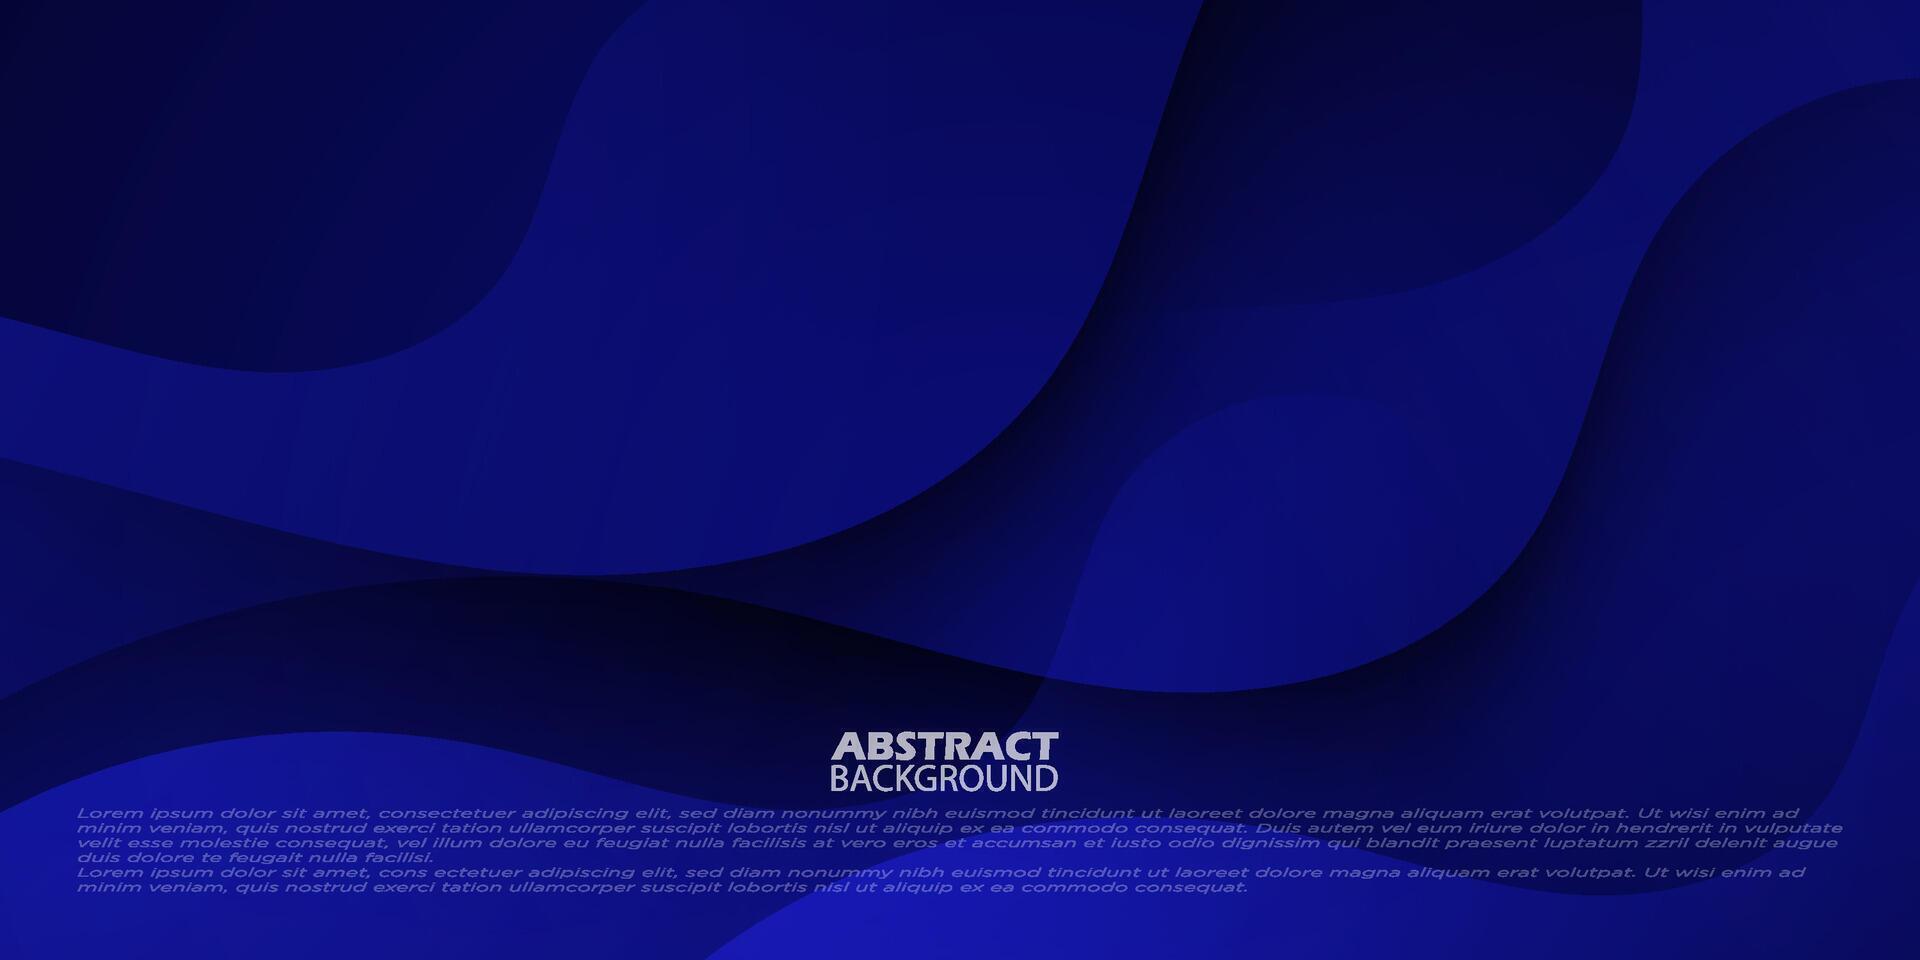 abstrakt 3d mörk blå Vinka med skugga form bakgrund. trogen Vinka bakgrund. eps10 vektor